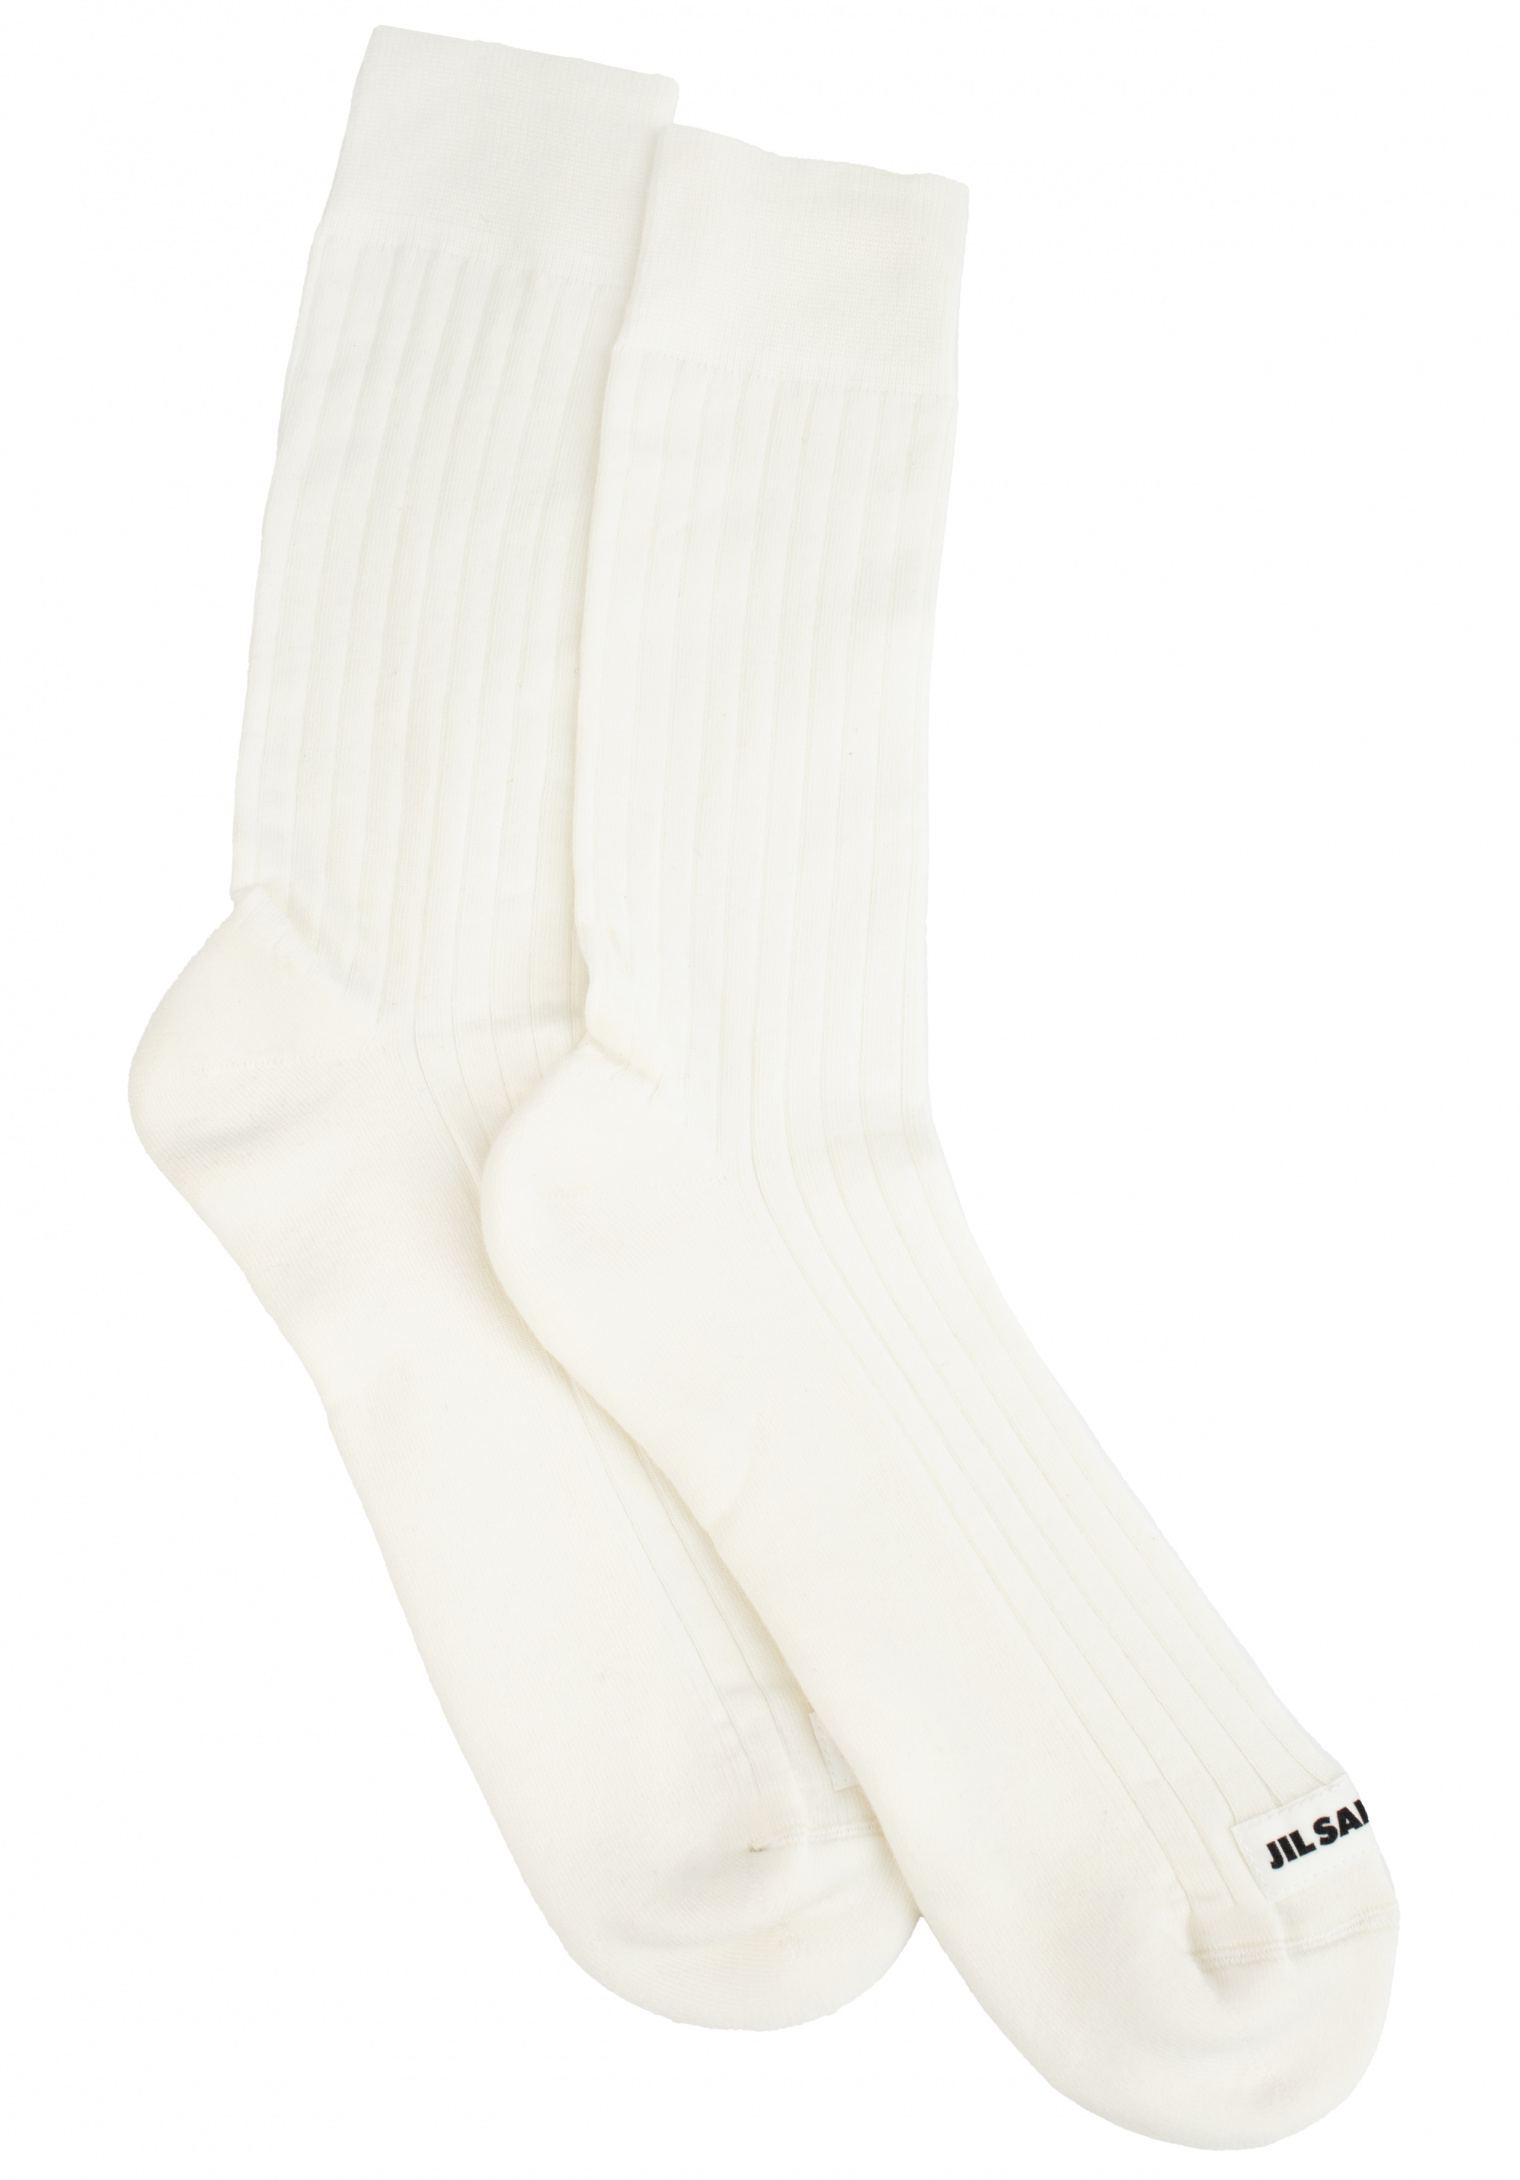 Jil Sander Ribbed Socks White